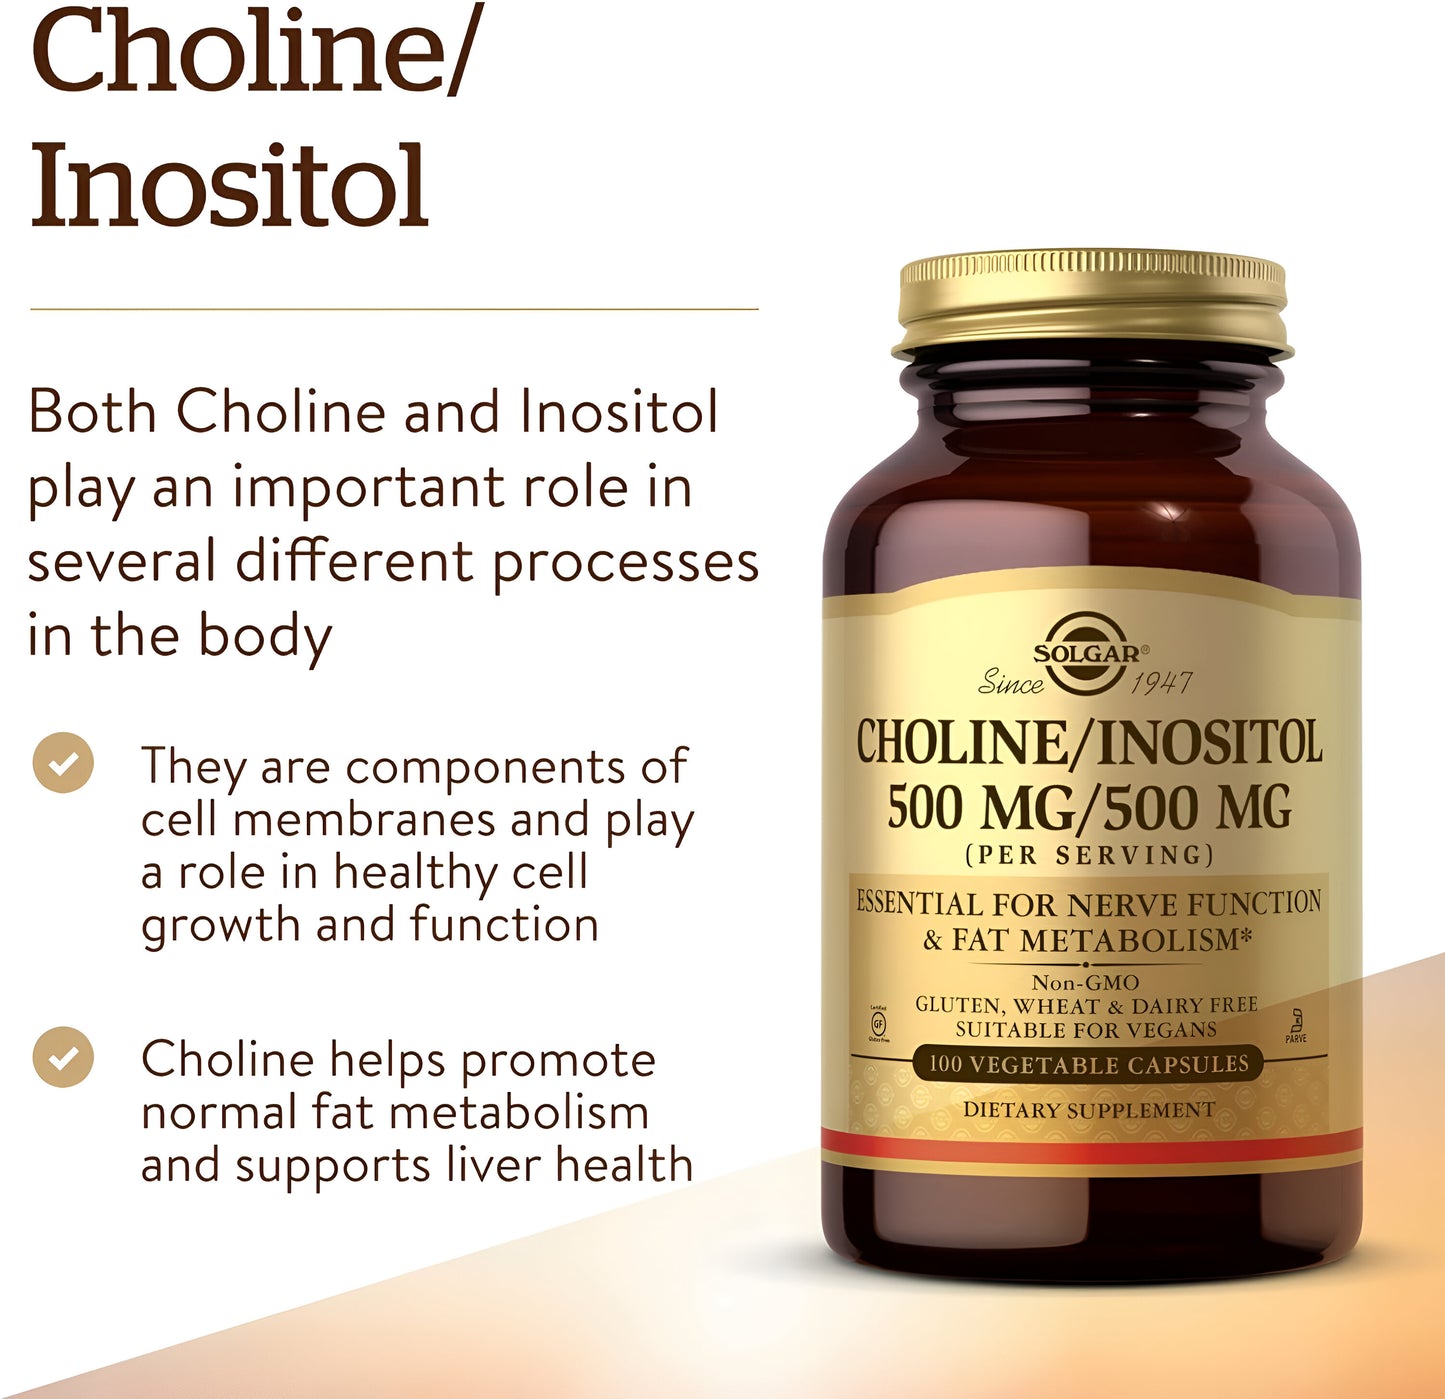 Solgar Choline/Inositol 500 mg/500 mg, 100 cápsulas vegetales - Sin OMG, vegano, sin gluten, sin lácteos